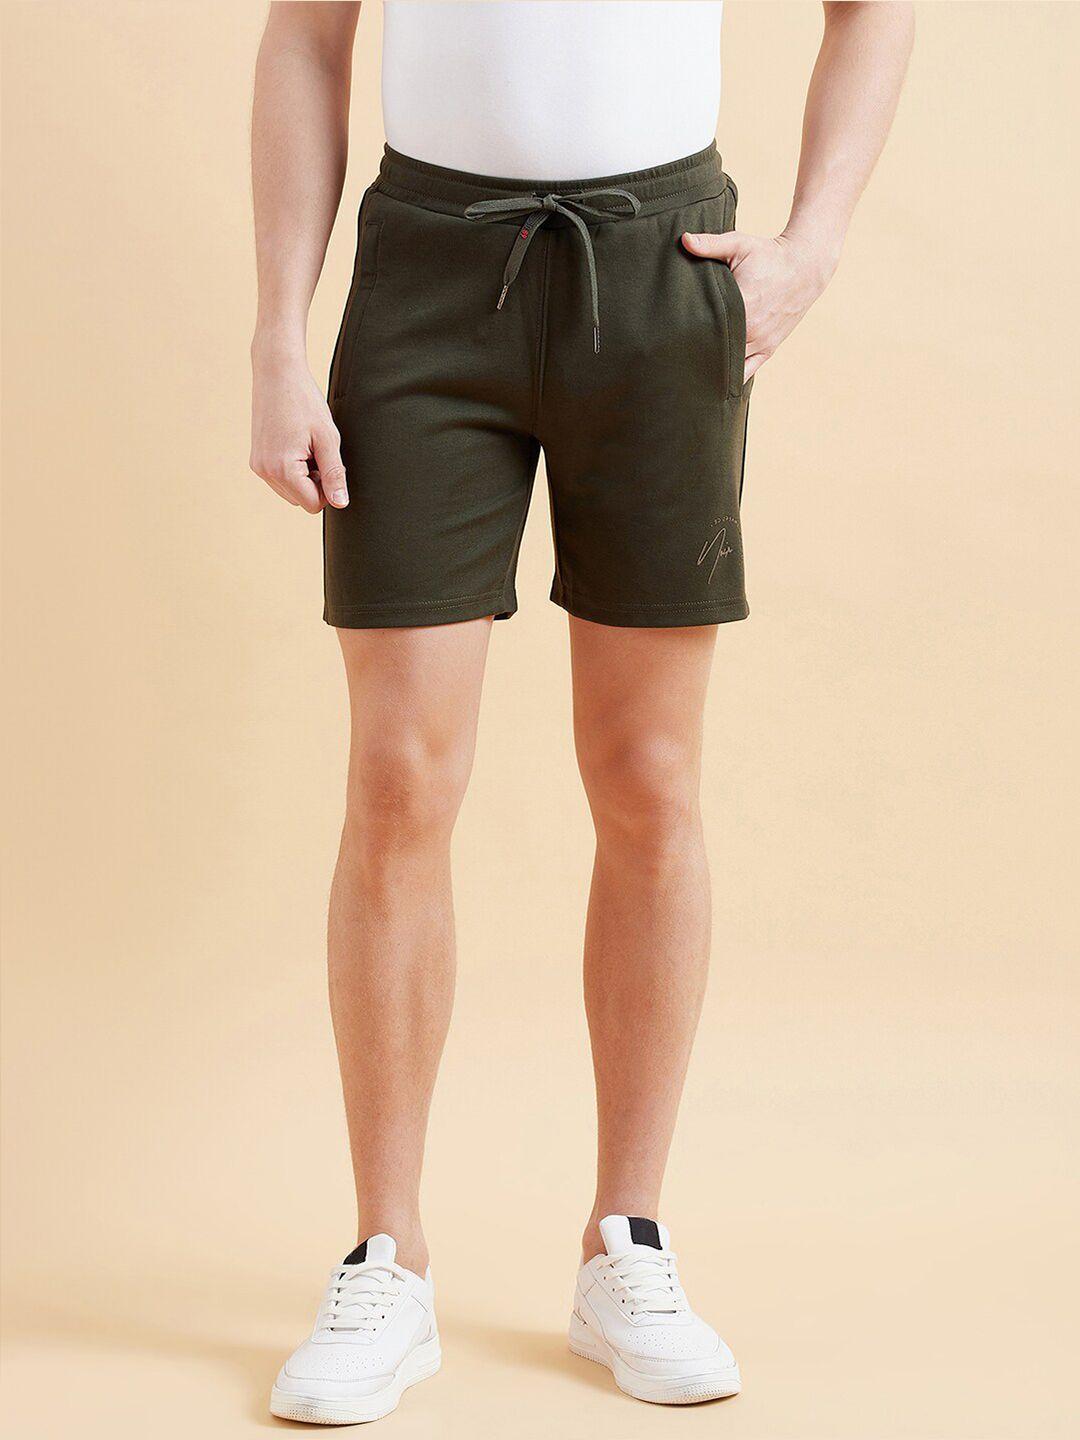 sweet-dreams-men-olive-green-mid-rise-shorts